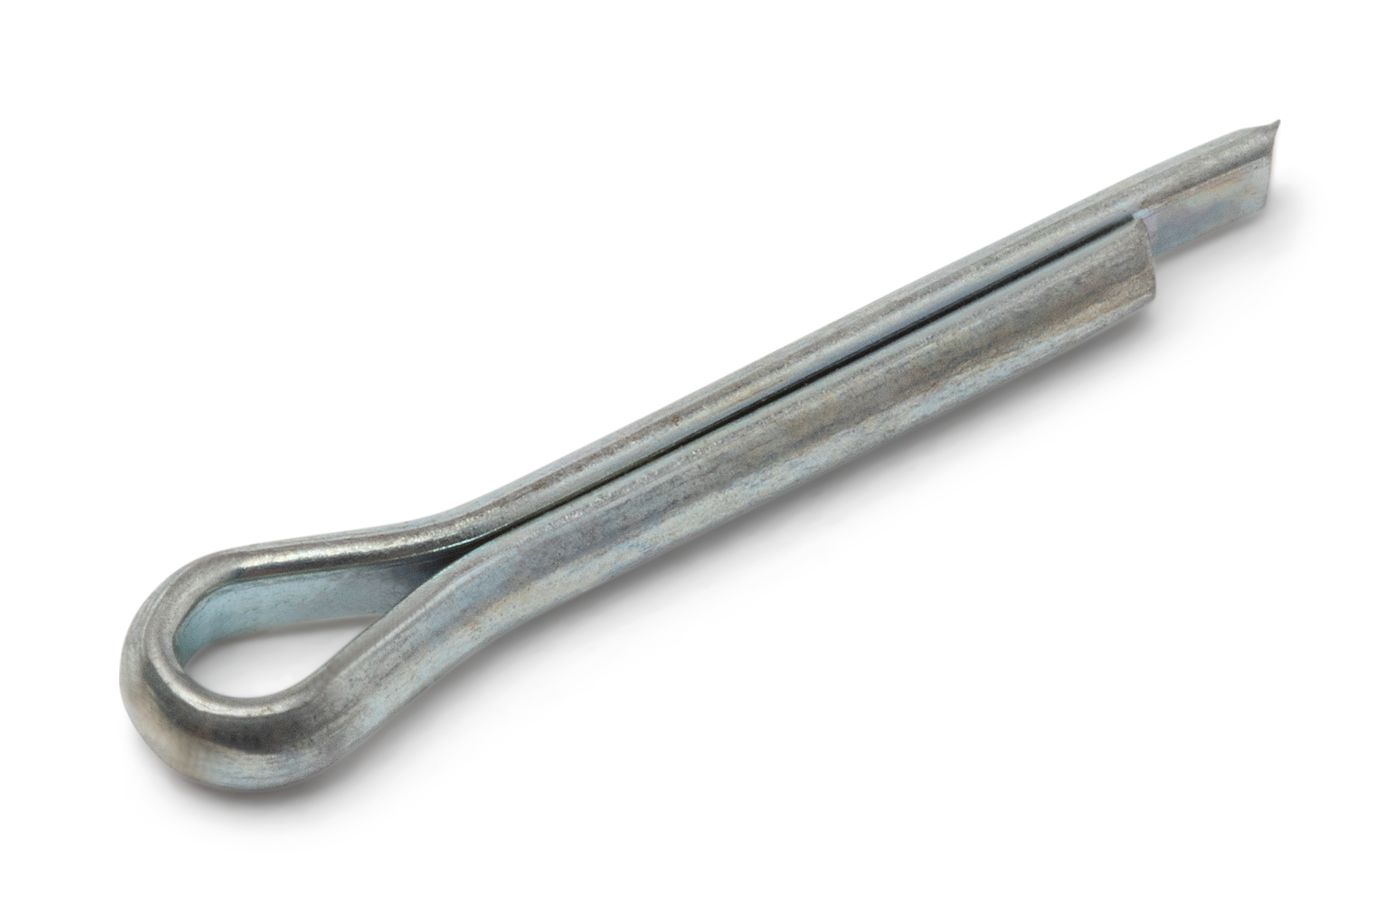 Sicherungssplint
Split pin
Goupille fendue
Chaveta de aseguramie